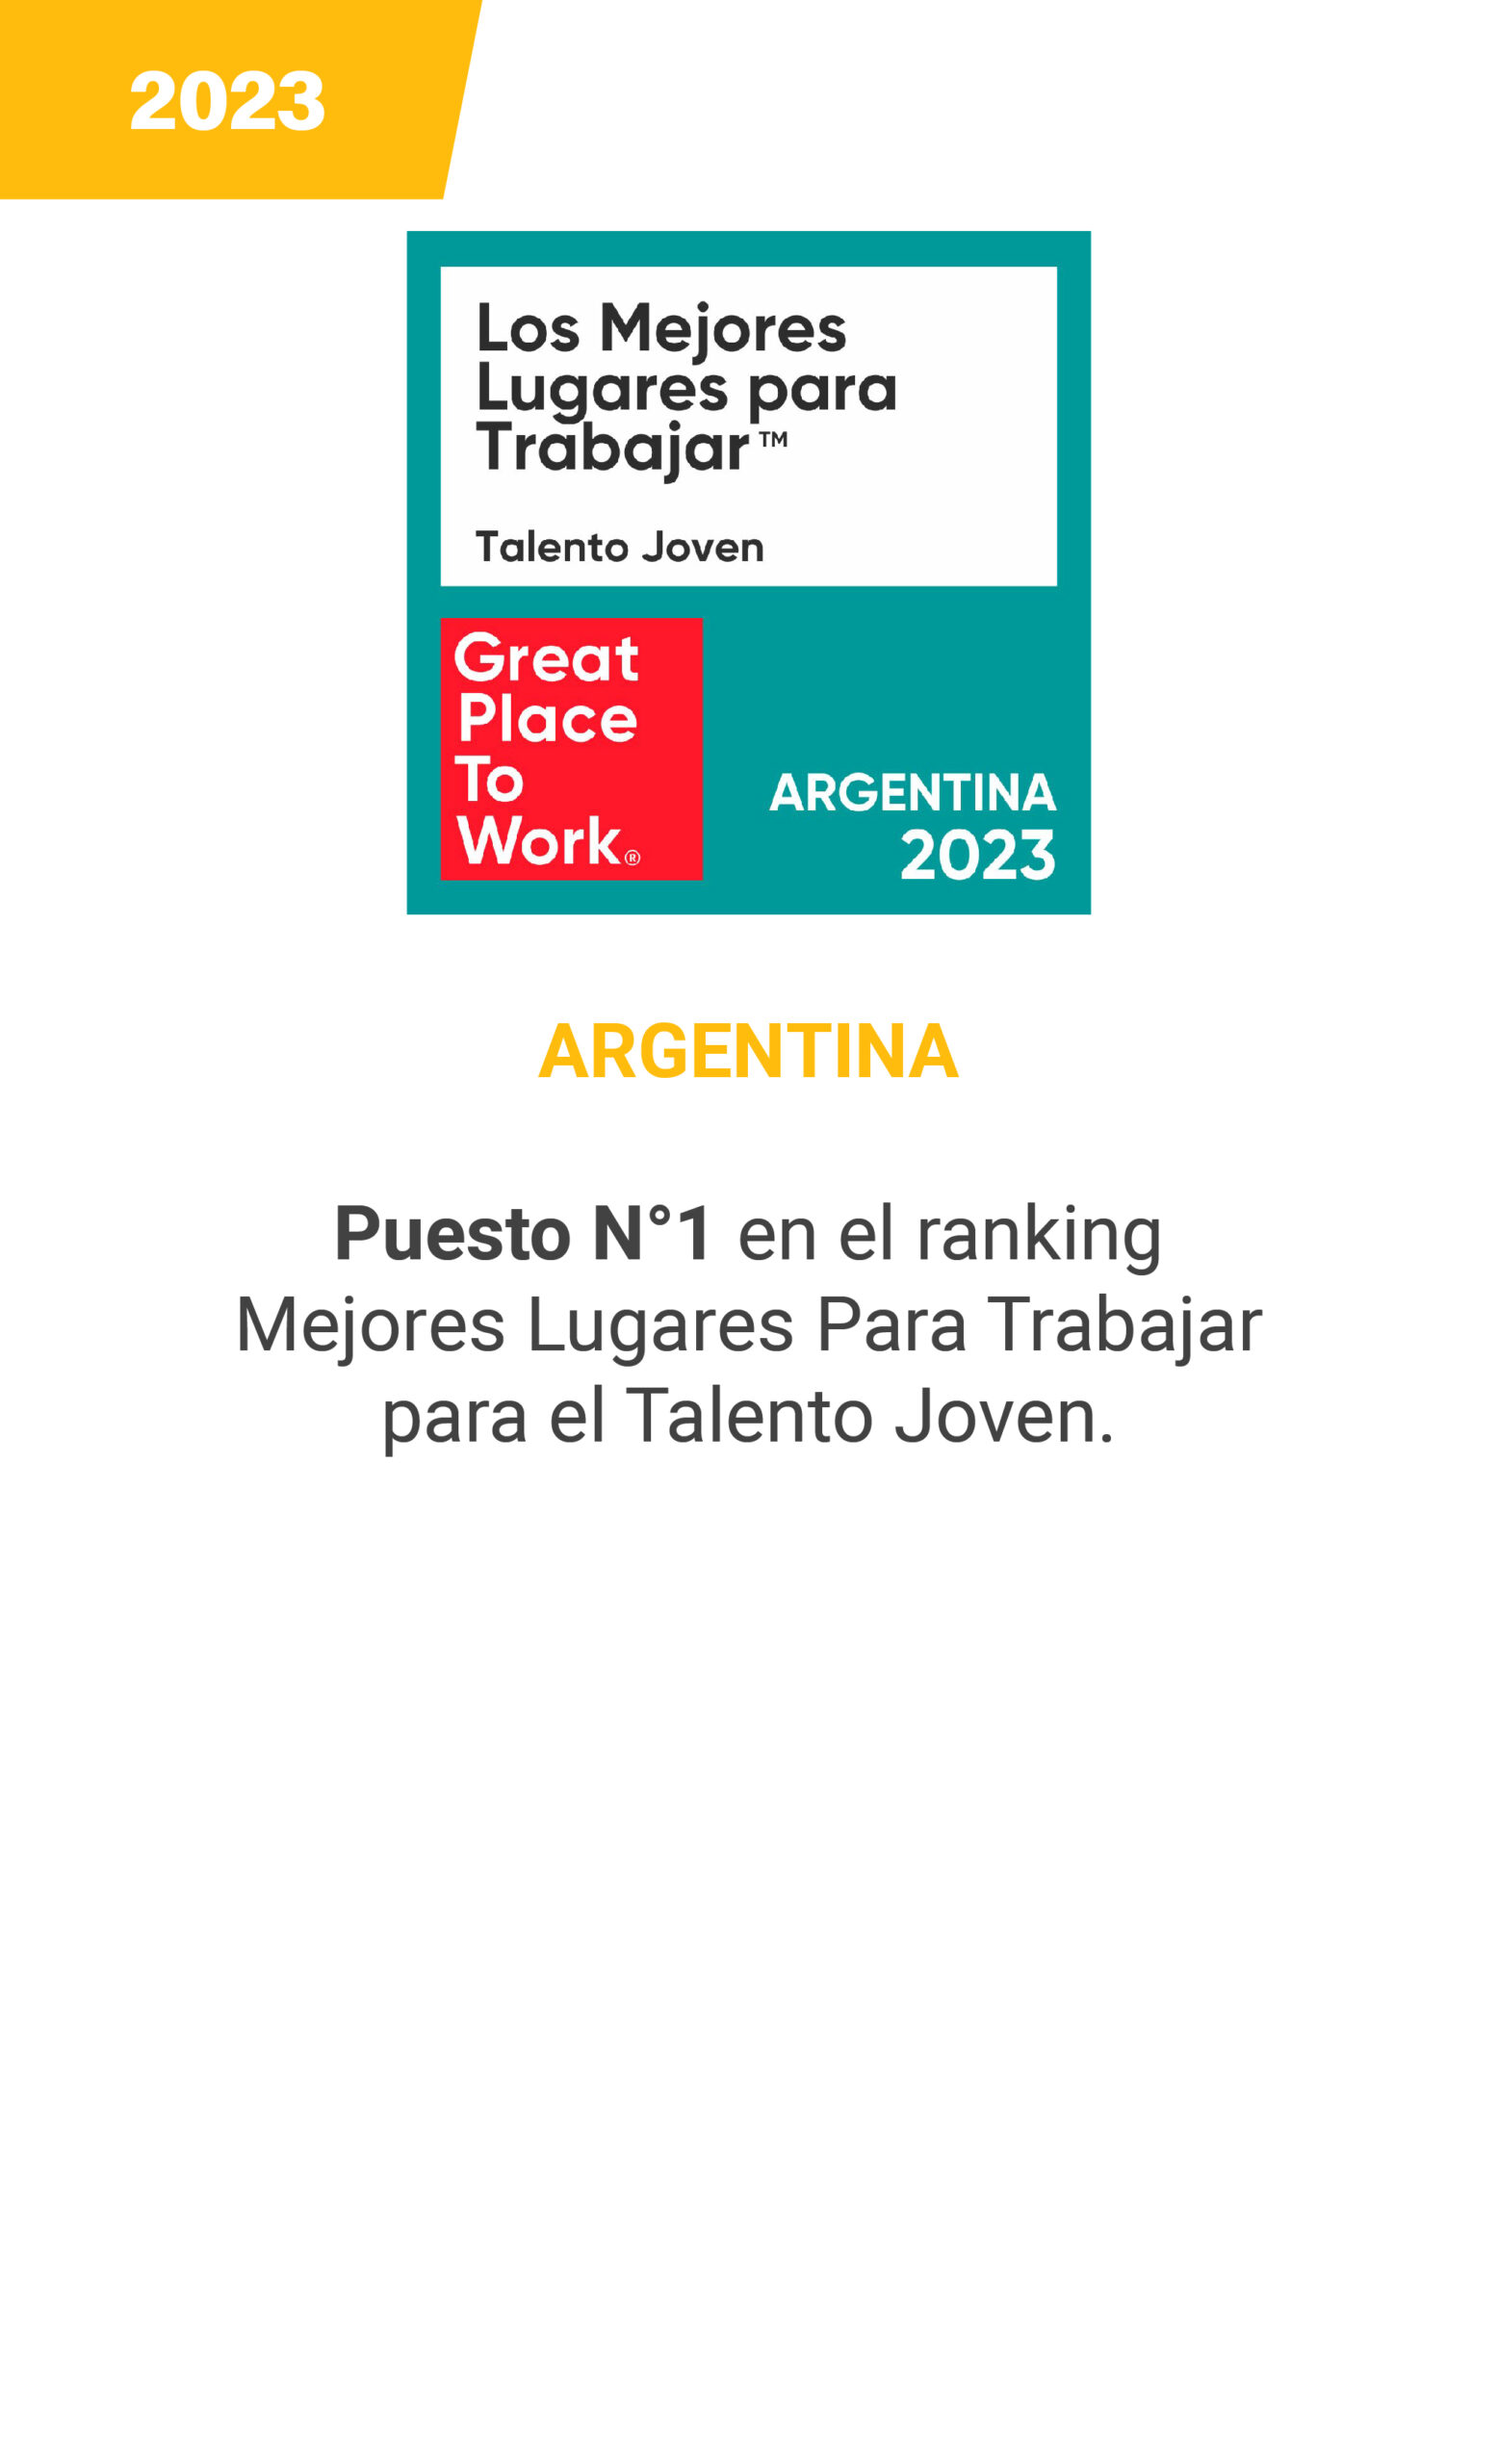 GPTW - Argentina 2023 - mobile